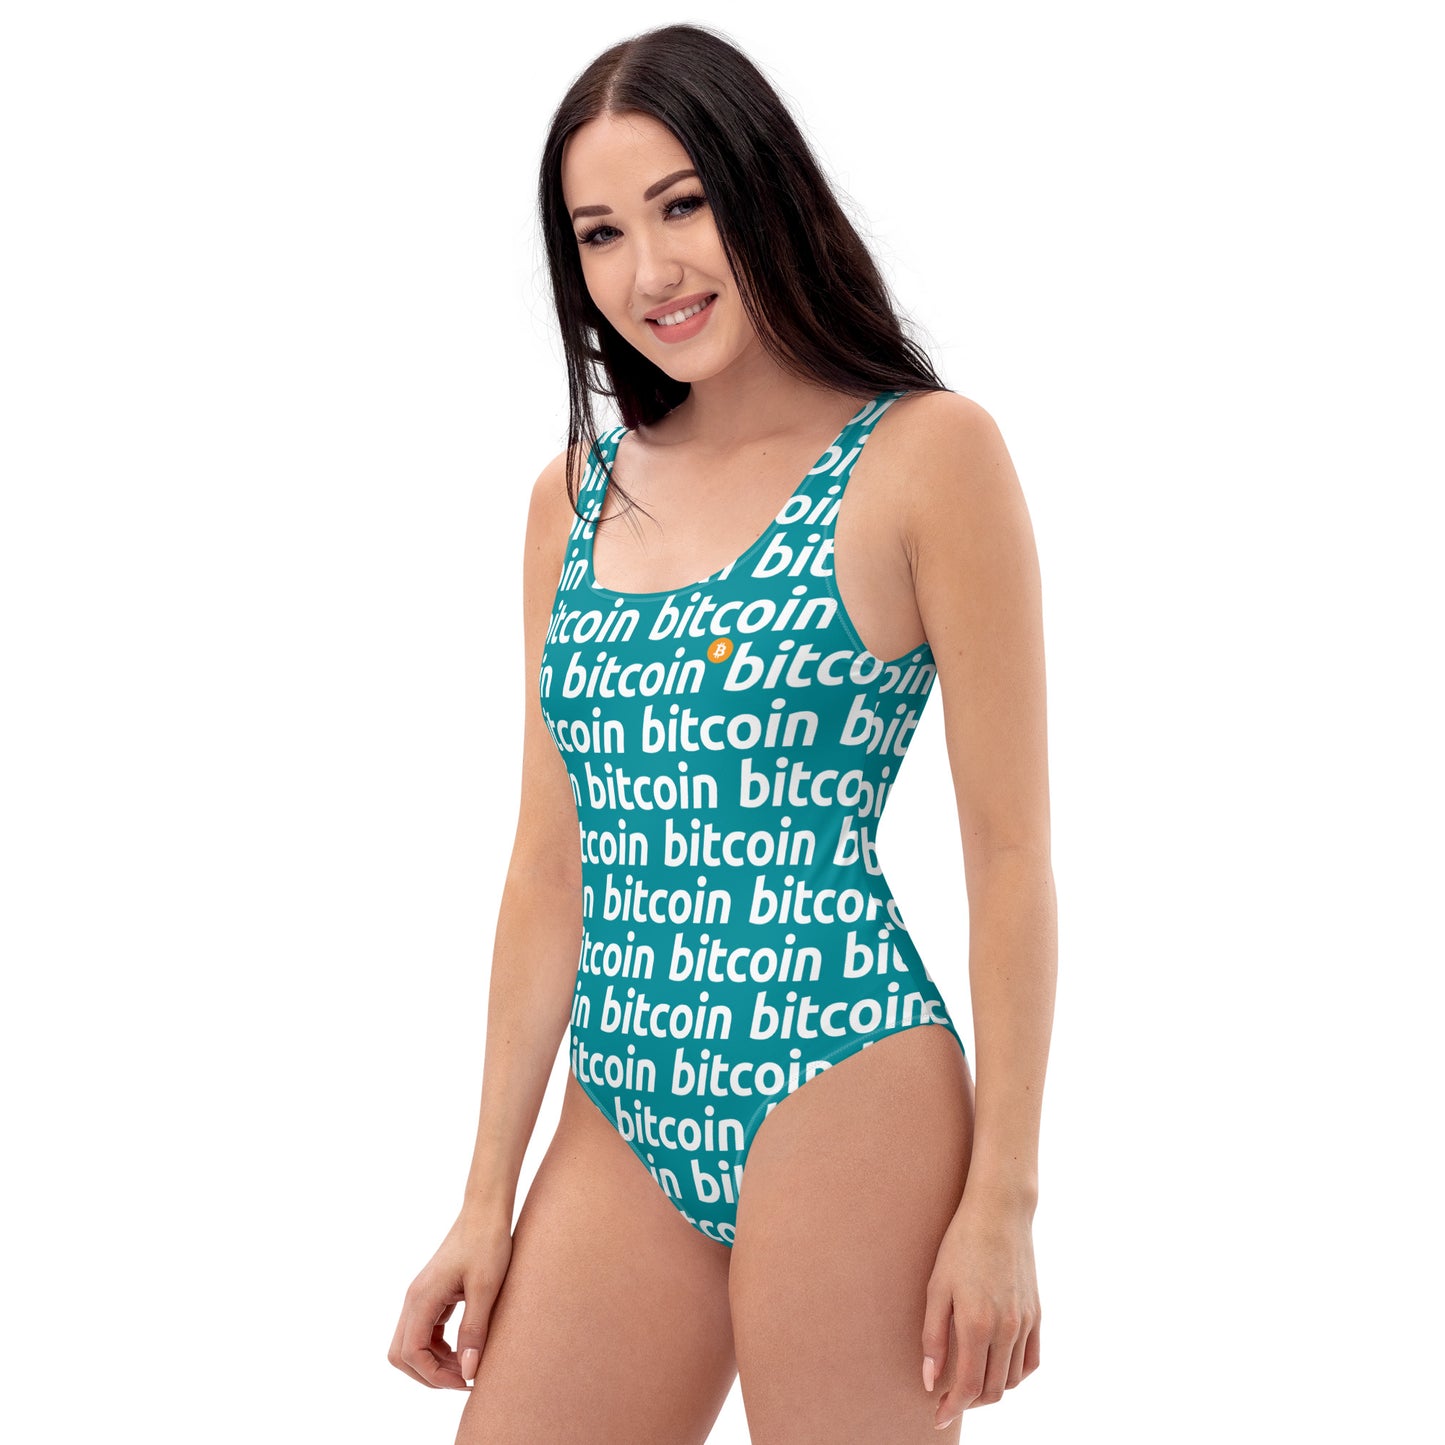 Bitcoin Blue White Swimsuit